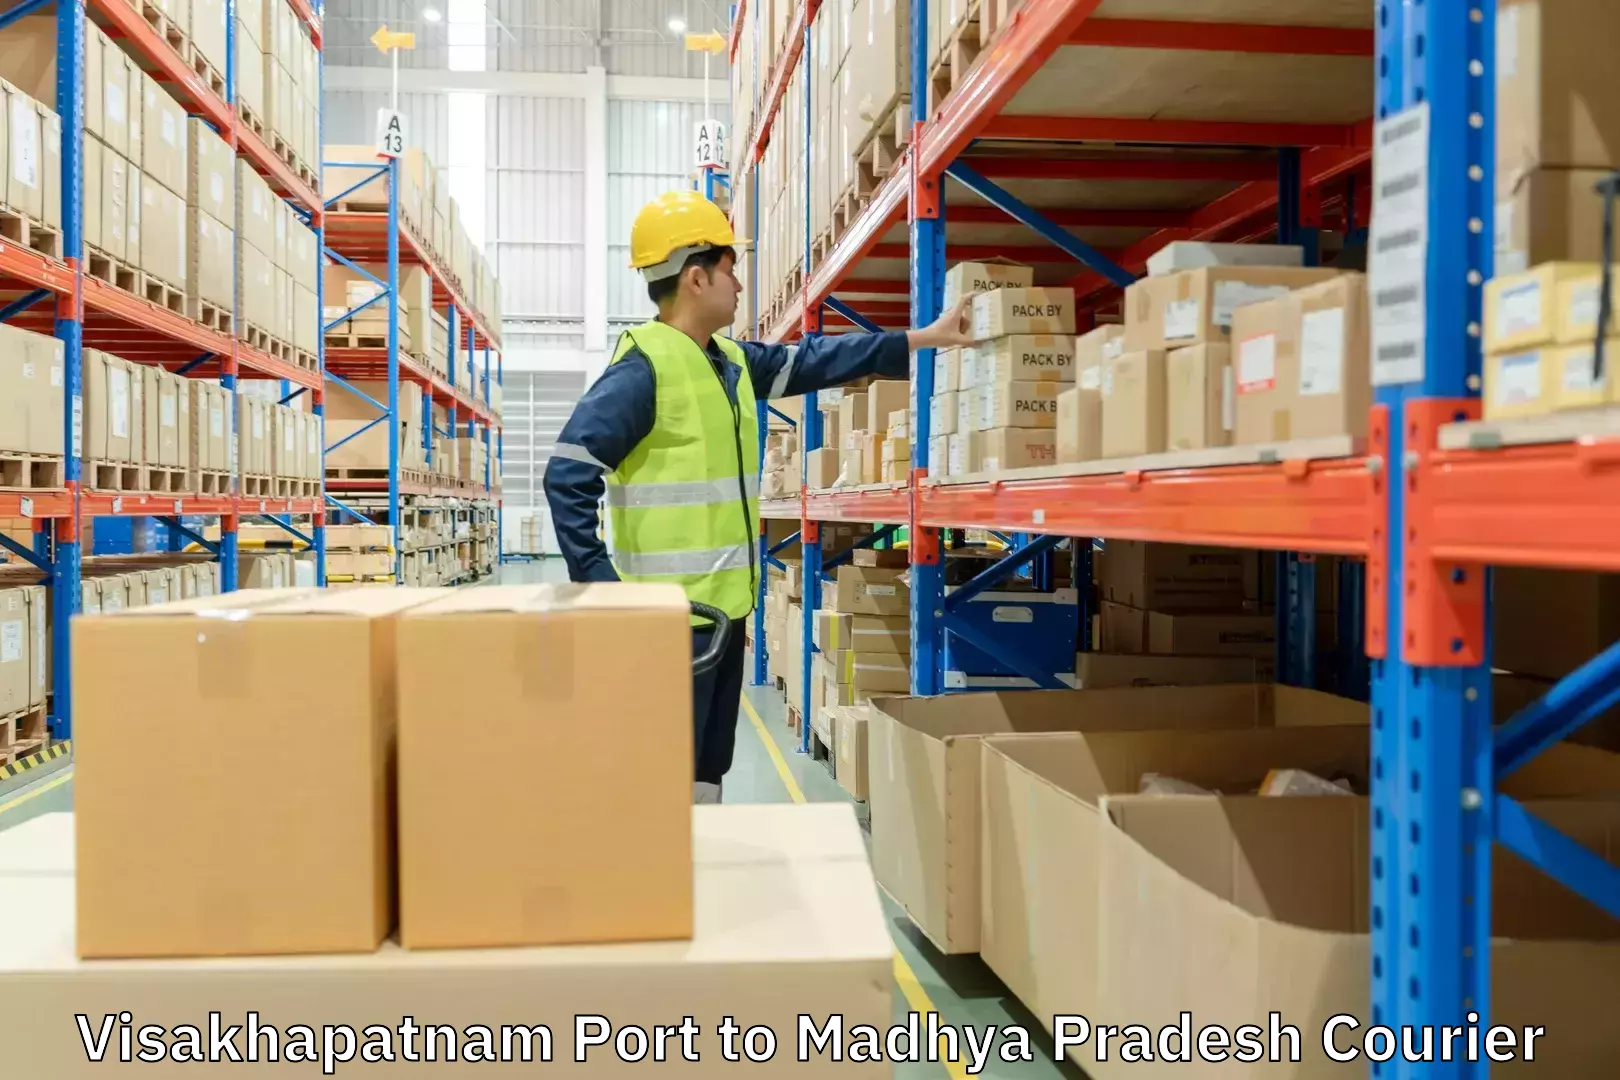 Global logistics network Visakhapatnam Port to Madhya Pradesh